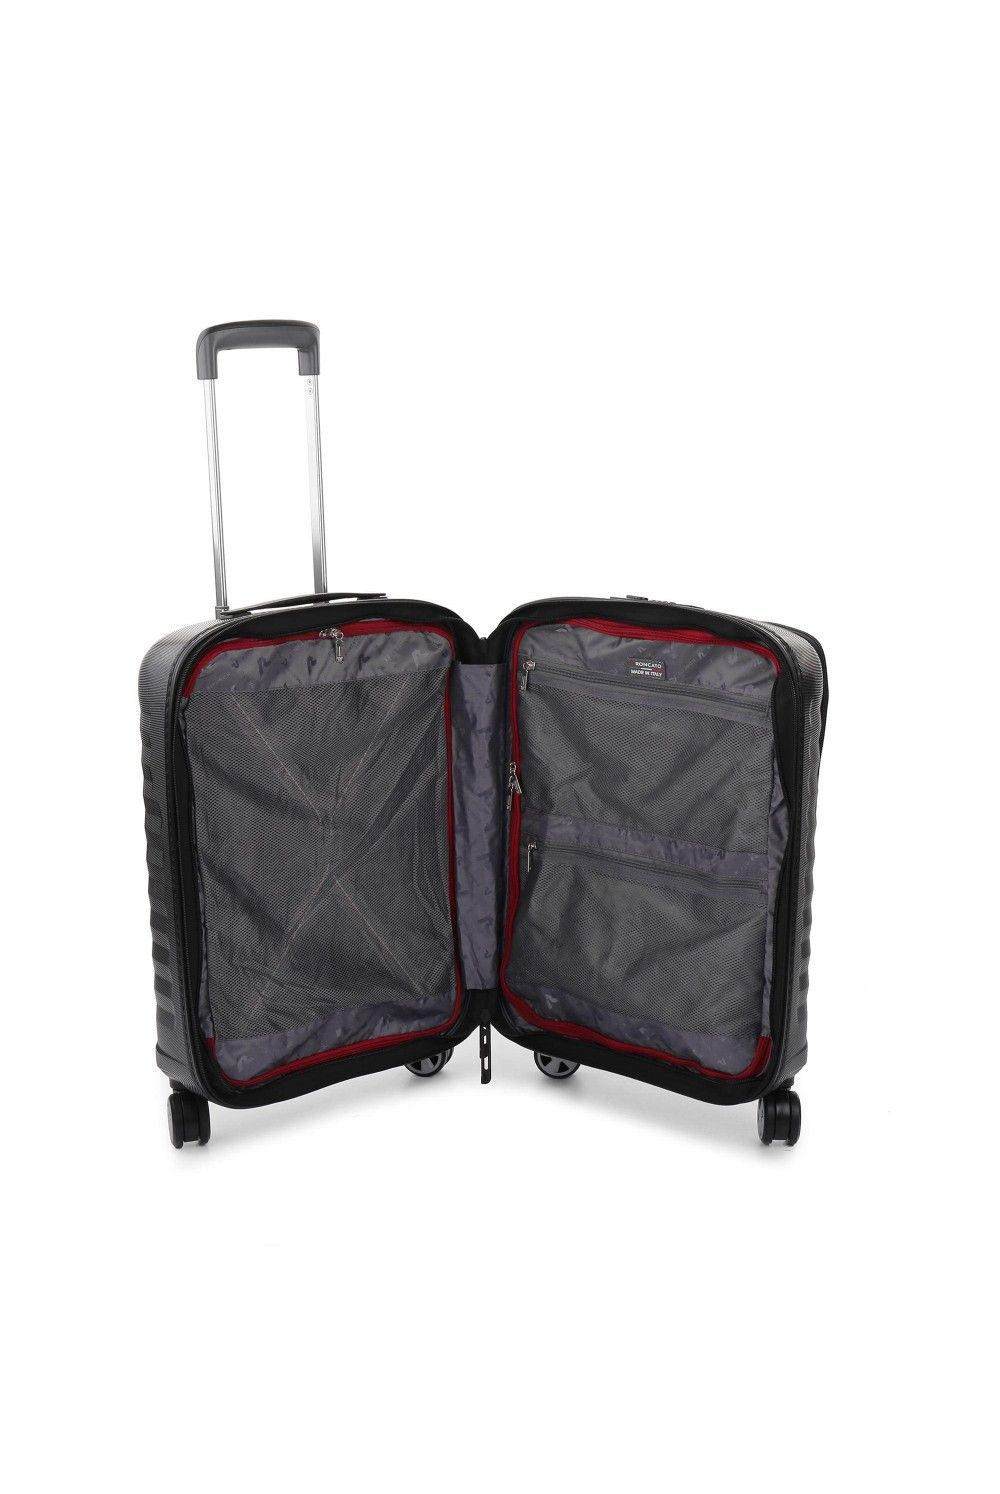 Roncato hand luggage D-Premium 55x40x20/23 expandable brown